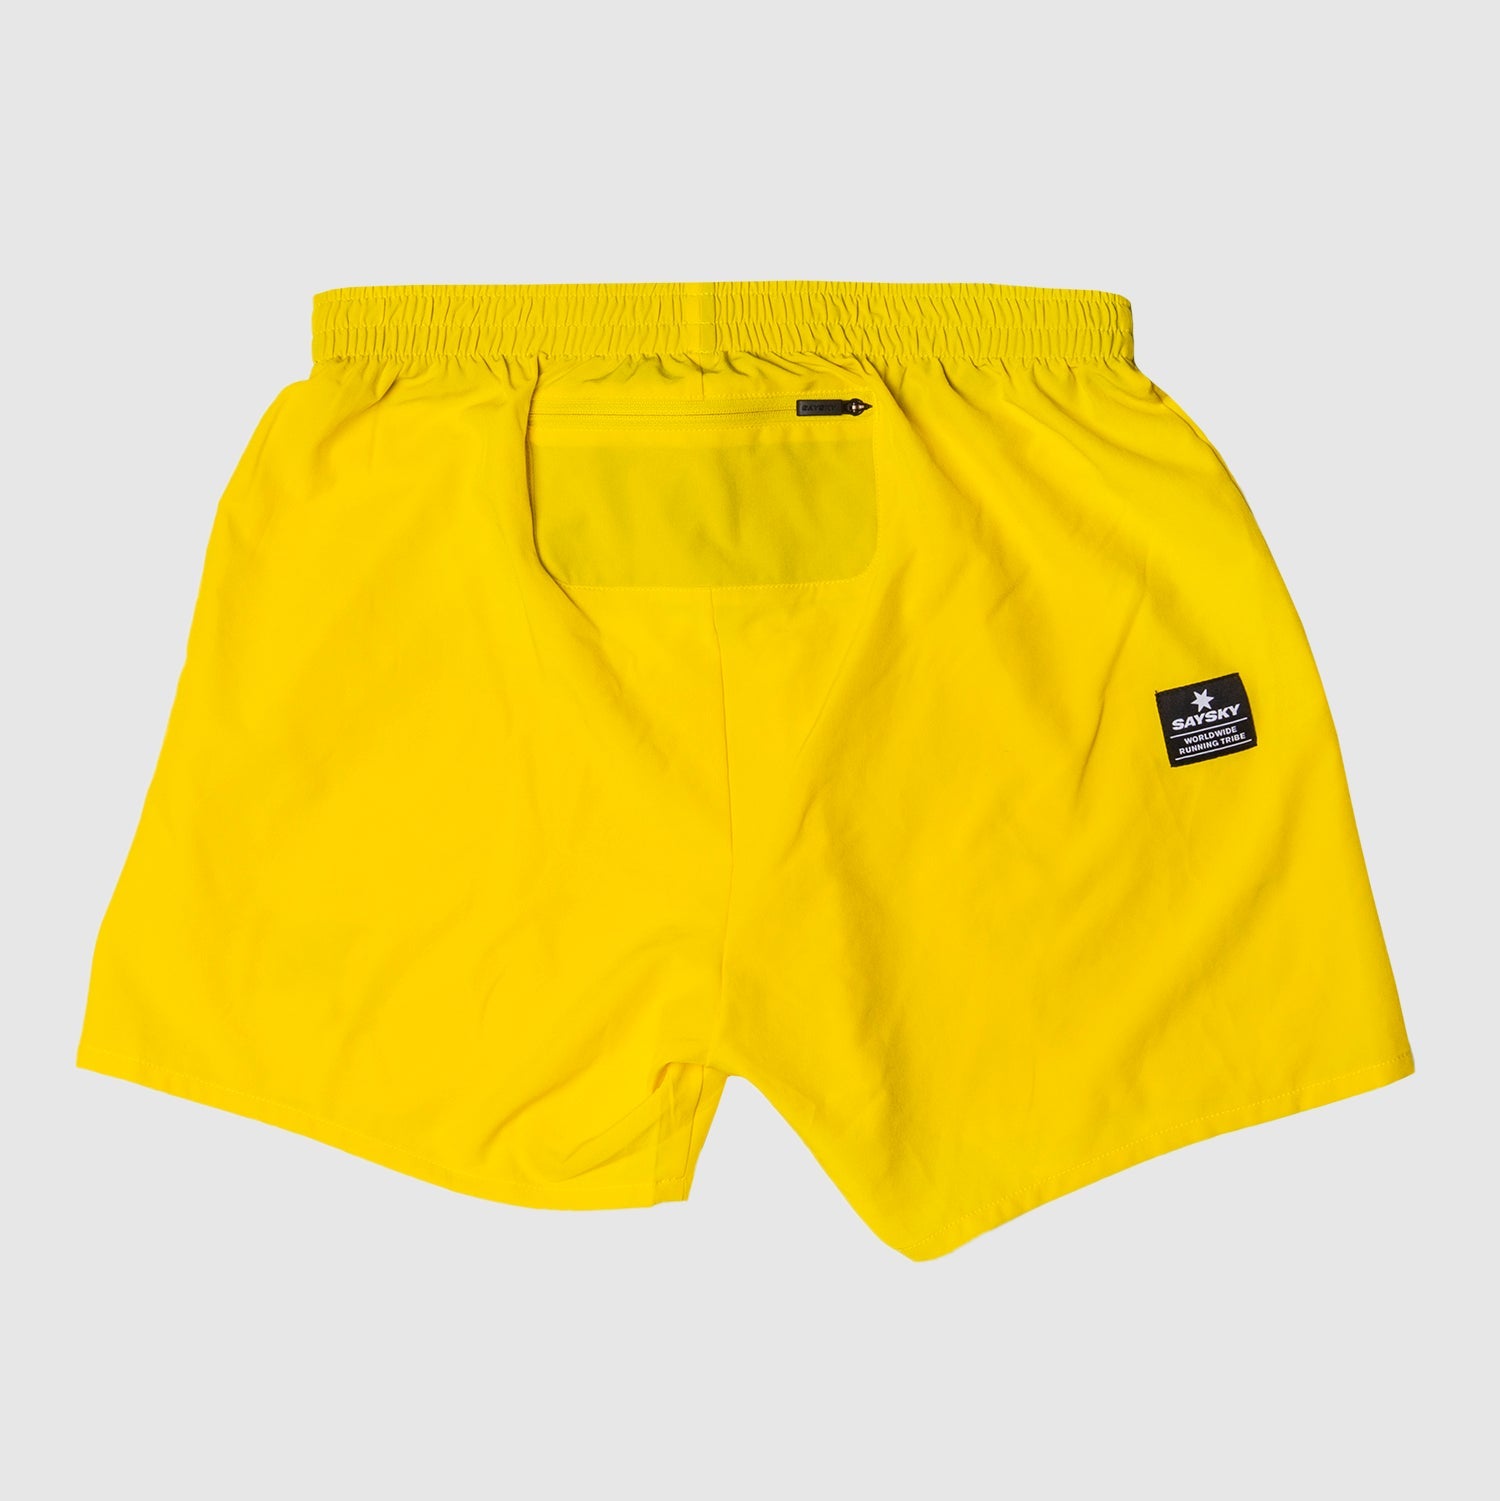 SAYSKY JP - ランニングショーツ HMRSH06 Pace Shorts - Empire Yellow 